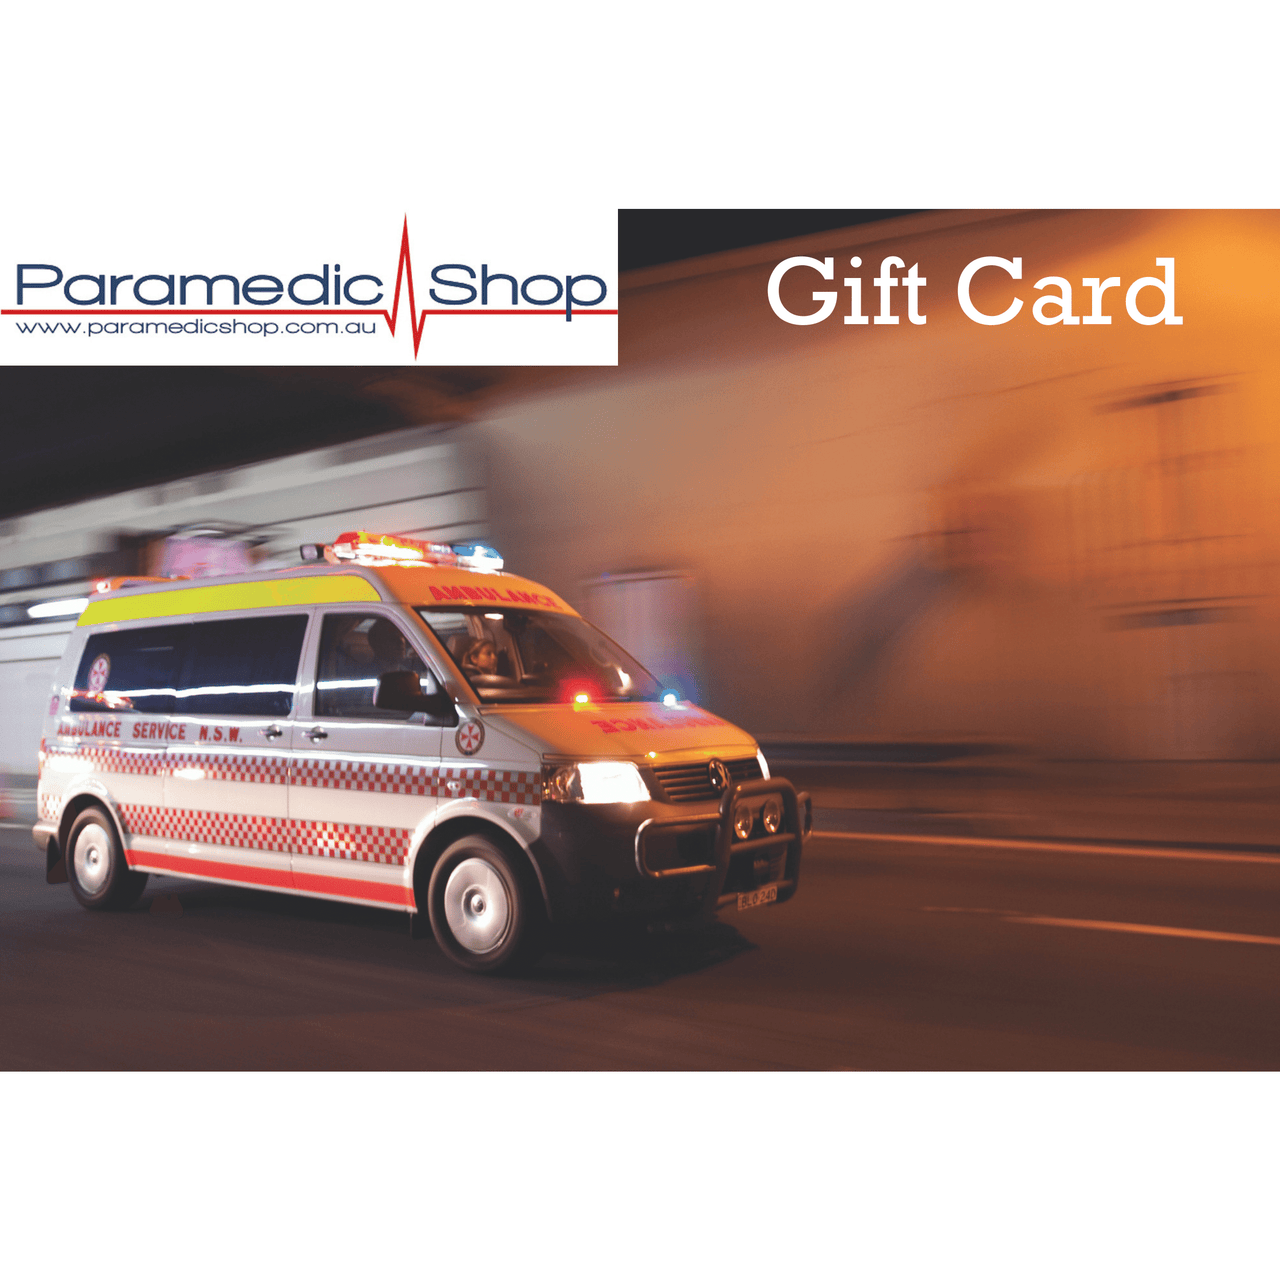 Paramedic Shop Paramedic Shop Gift Card $10.00 AUD Gift Card